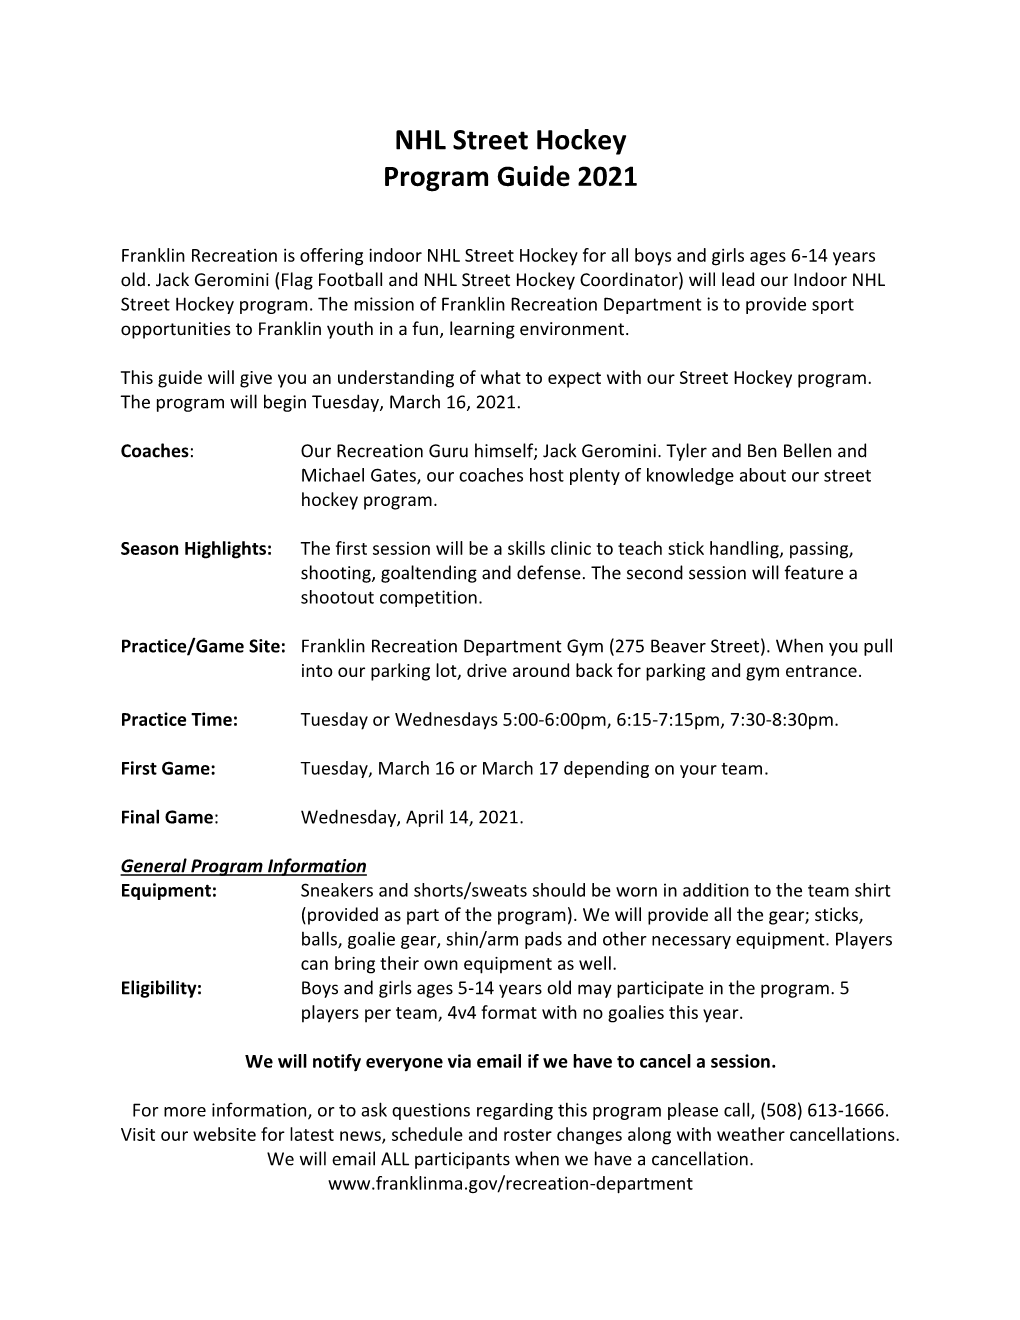 NHL Street Hockey Program Guide 2021